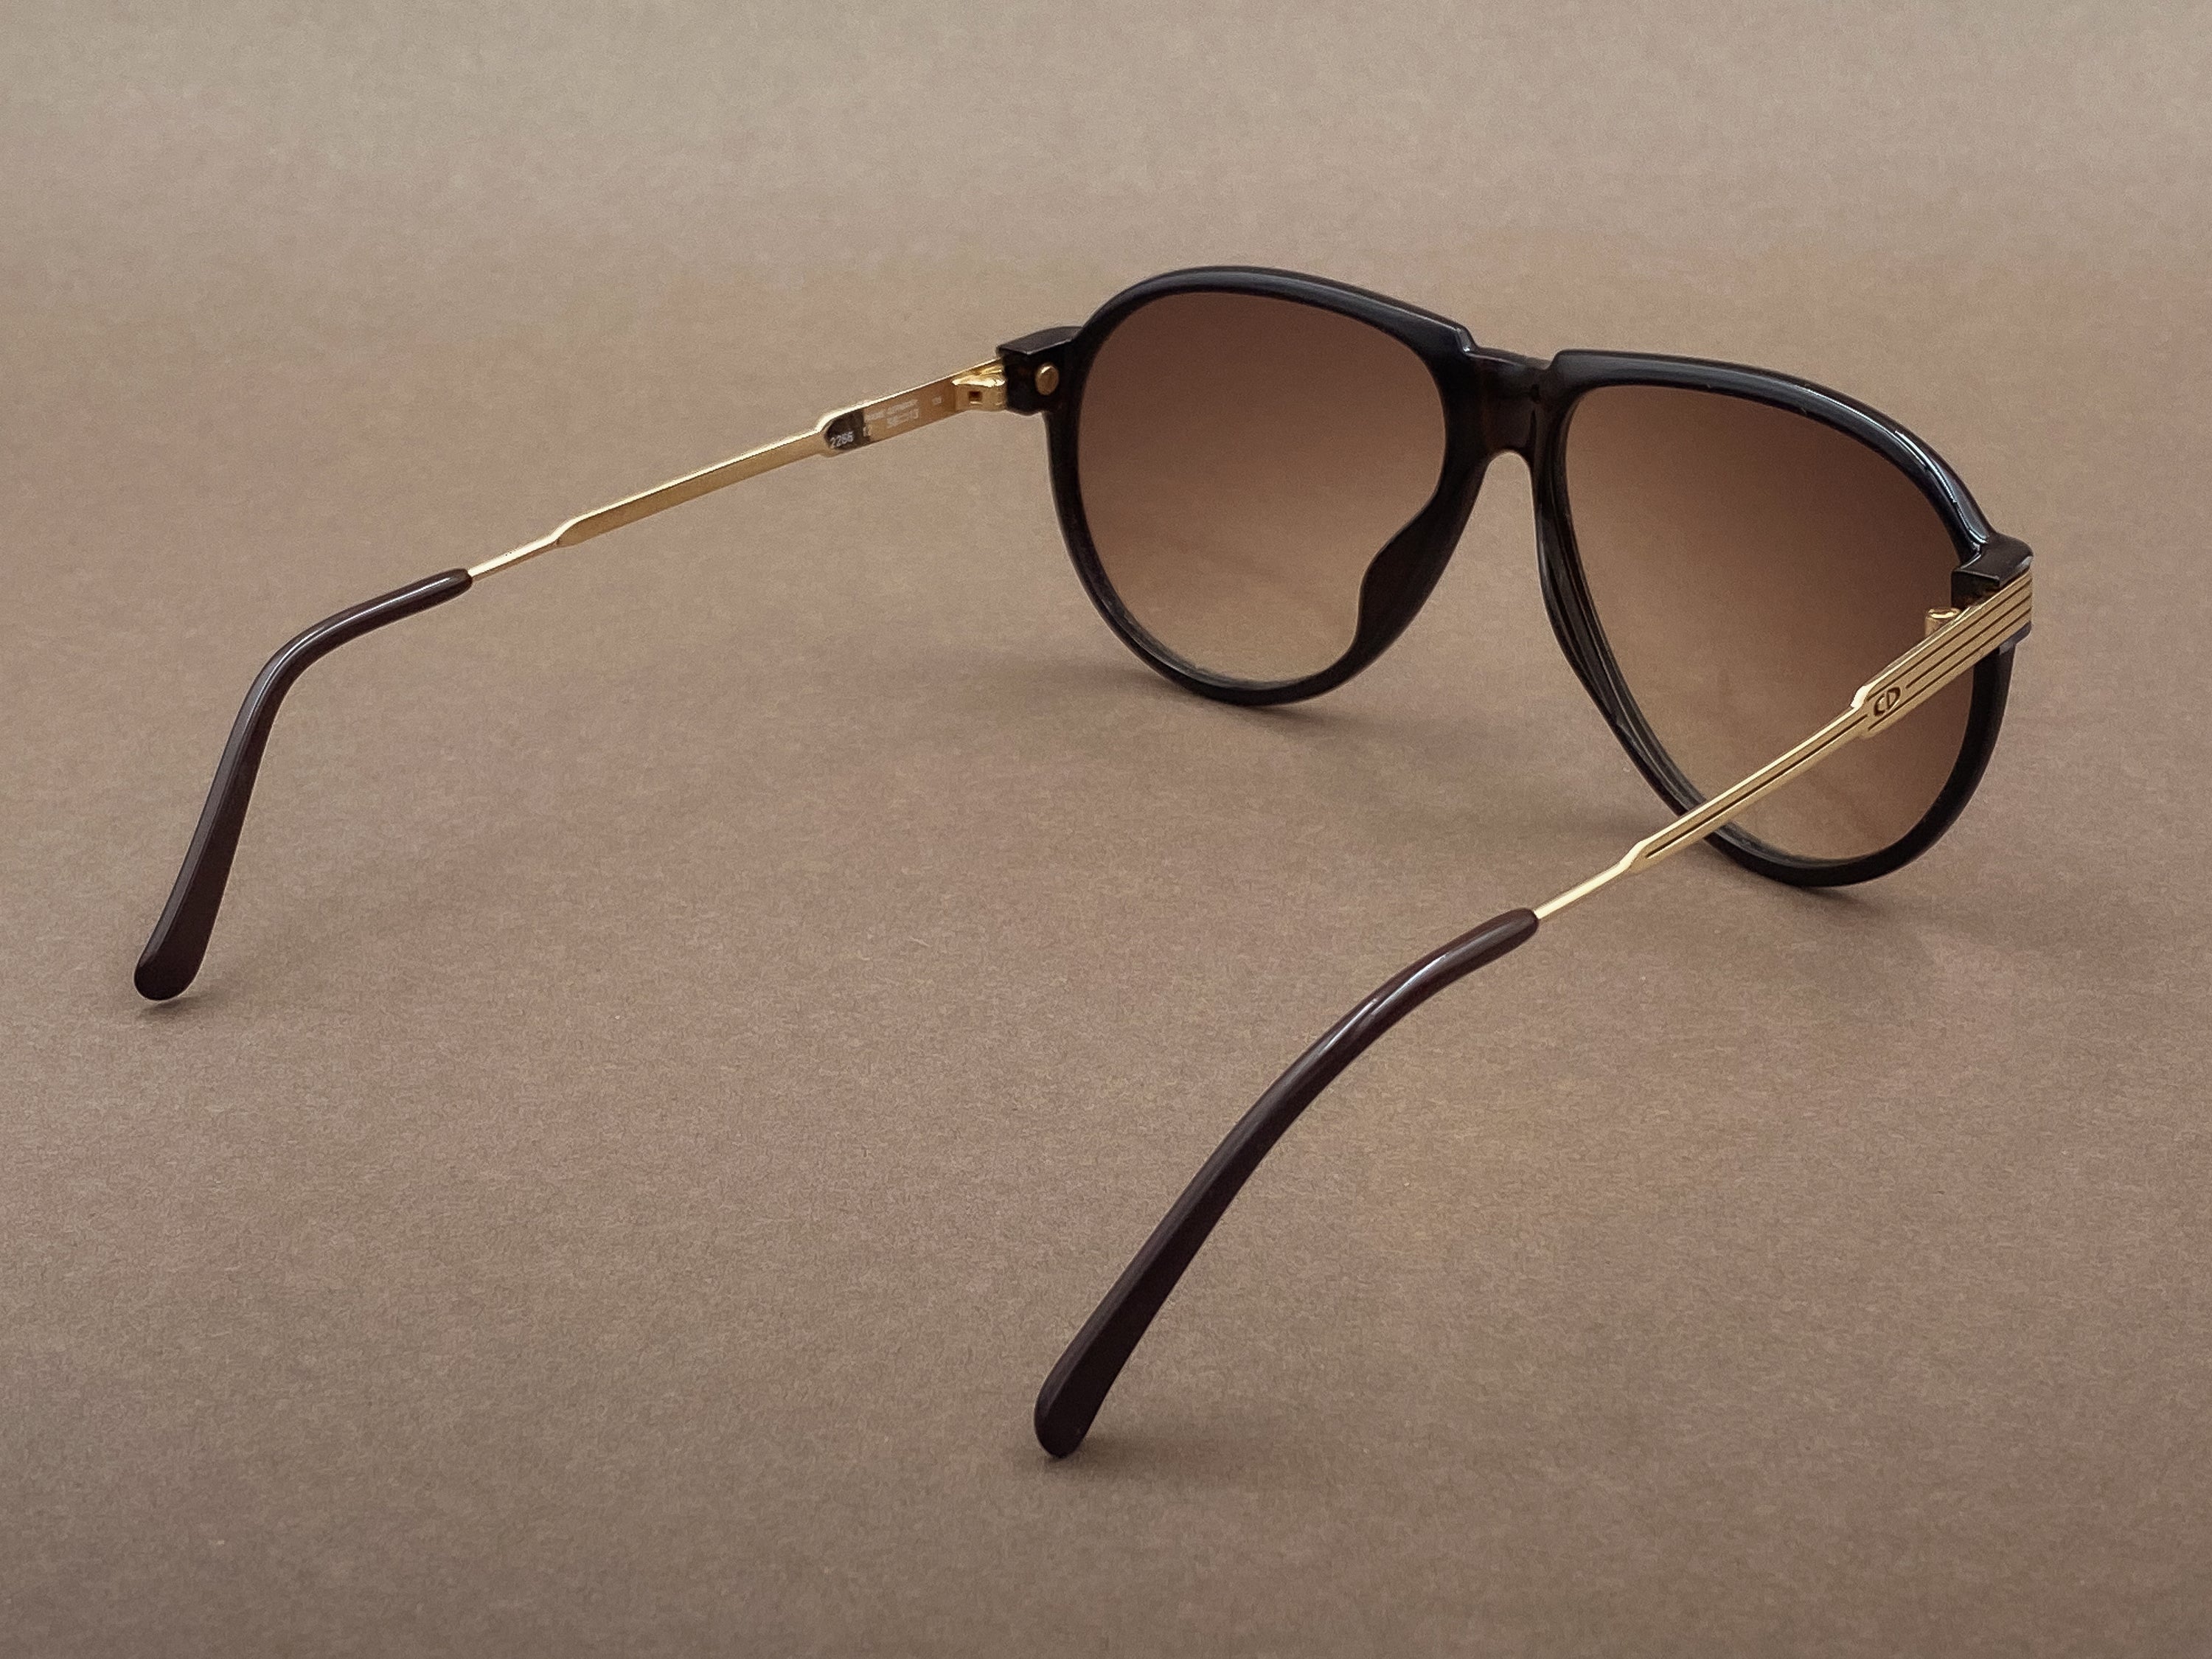 Christian Dior 2266 Monsieur series sunglasses